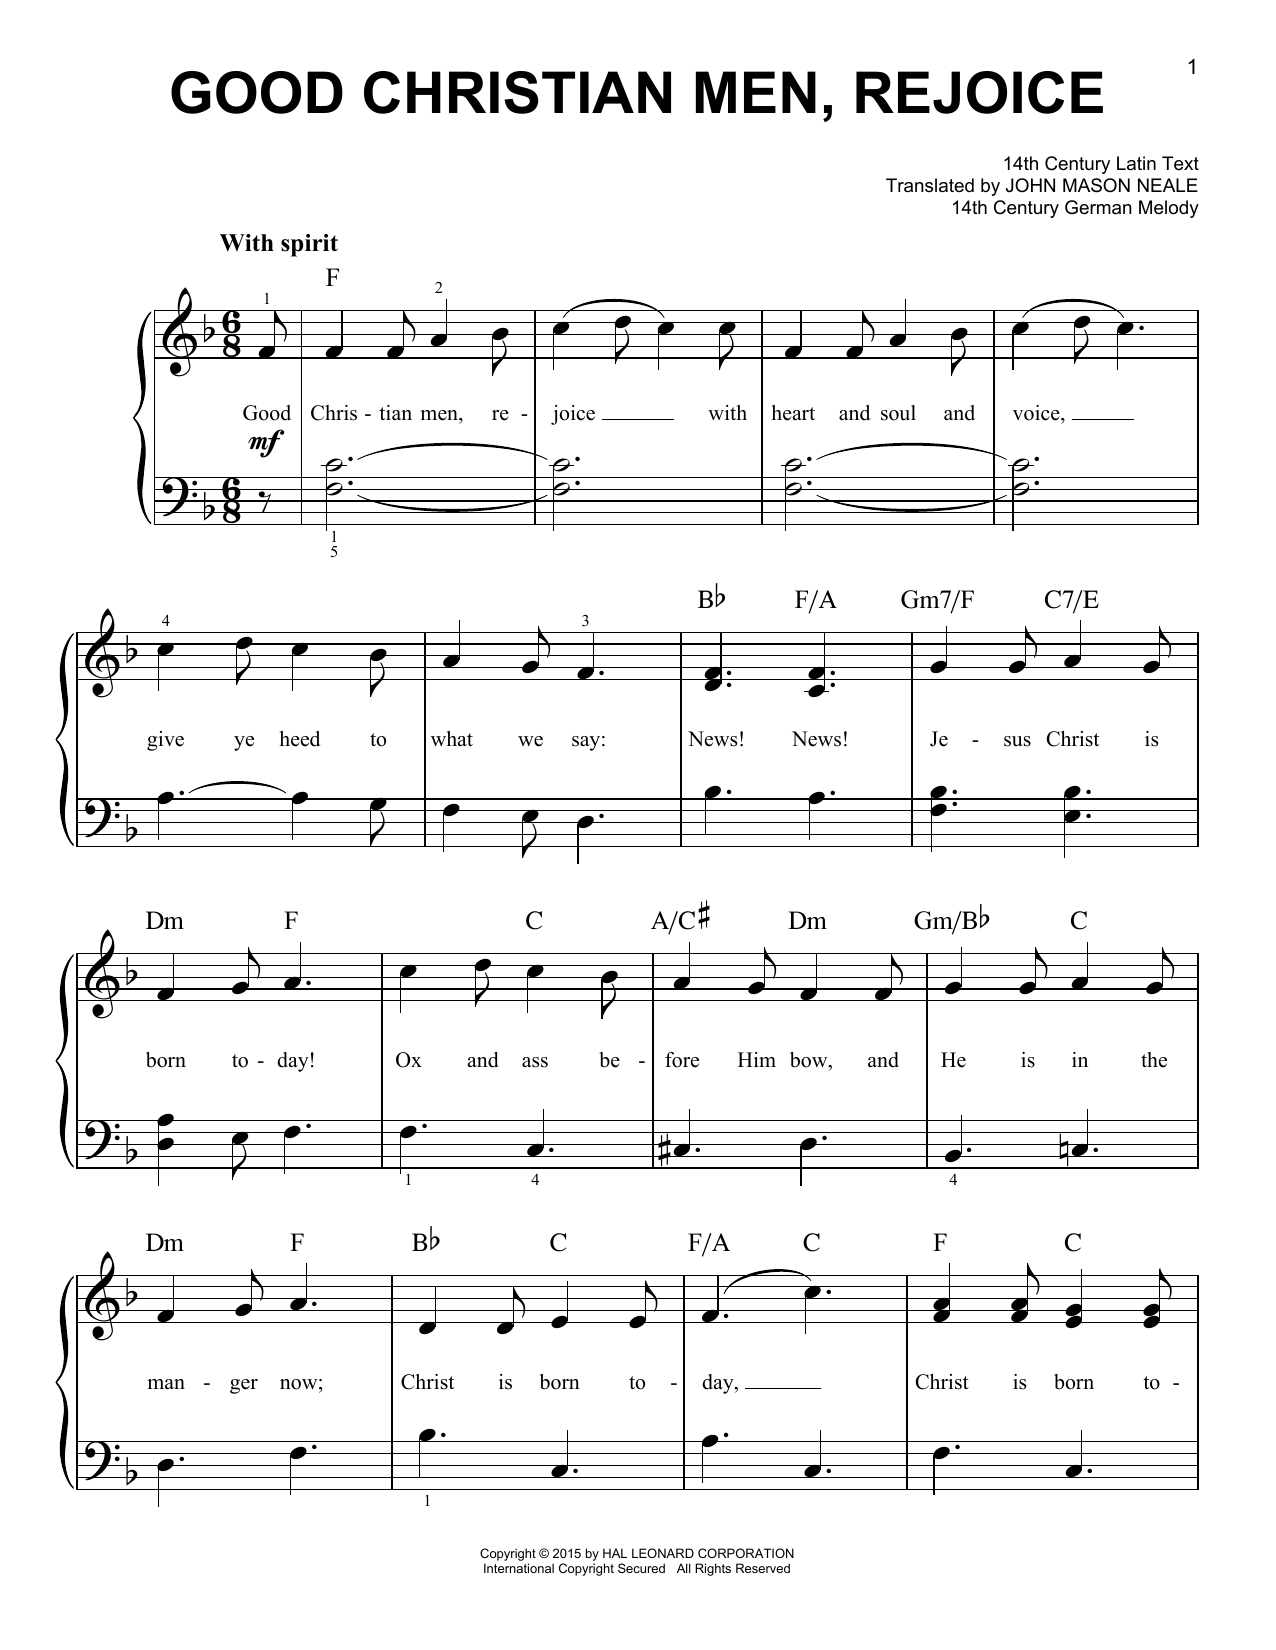 John Mason Neale Good Christian Men, Rejoice Sheet Music Notes & Chords for Ukulele with strumming patterns - Download or Print PDF